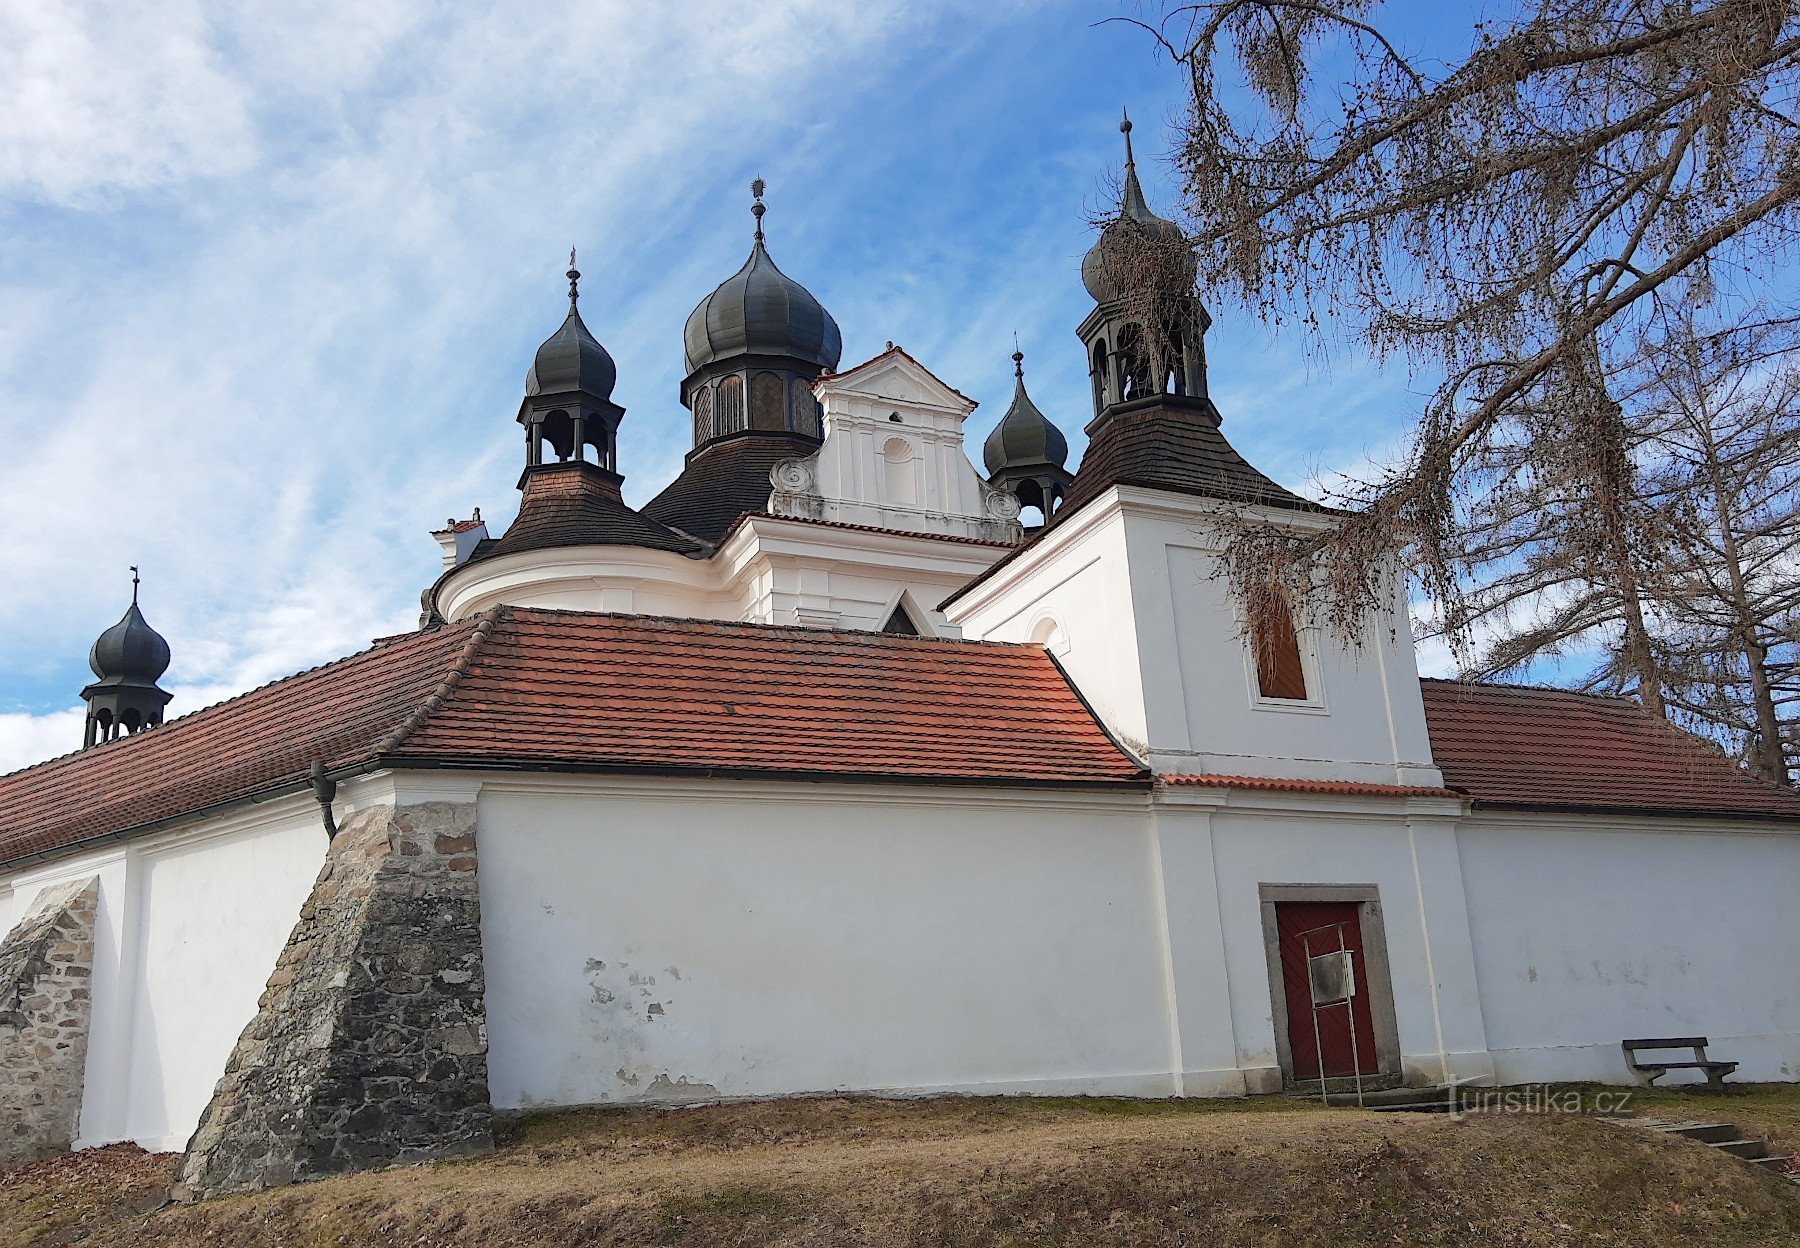 Trhové Sviny - pelerinaj Biserica baroc a Sfintei Treimi